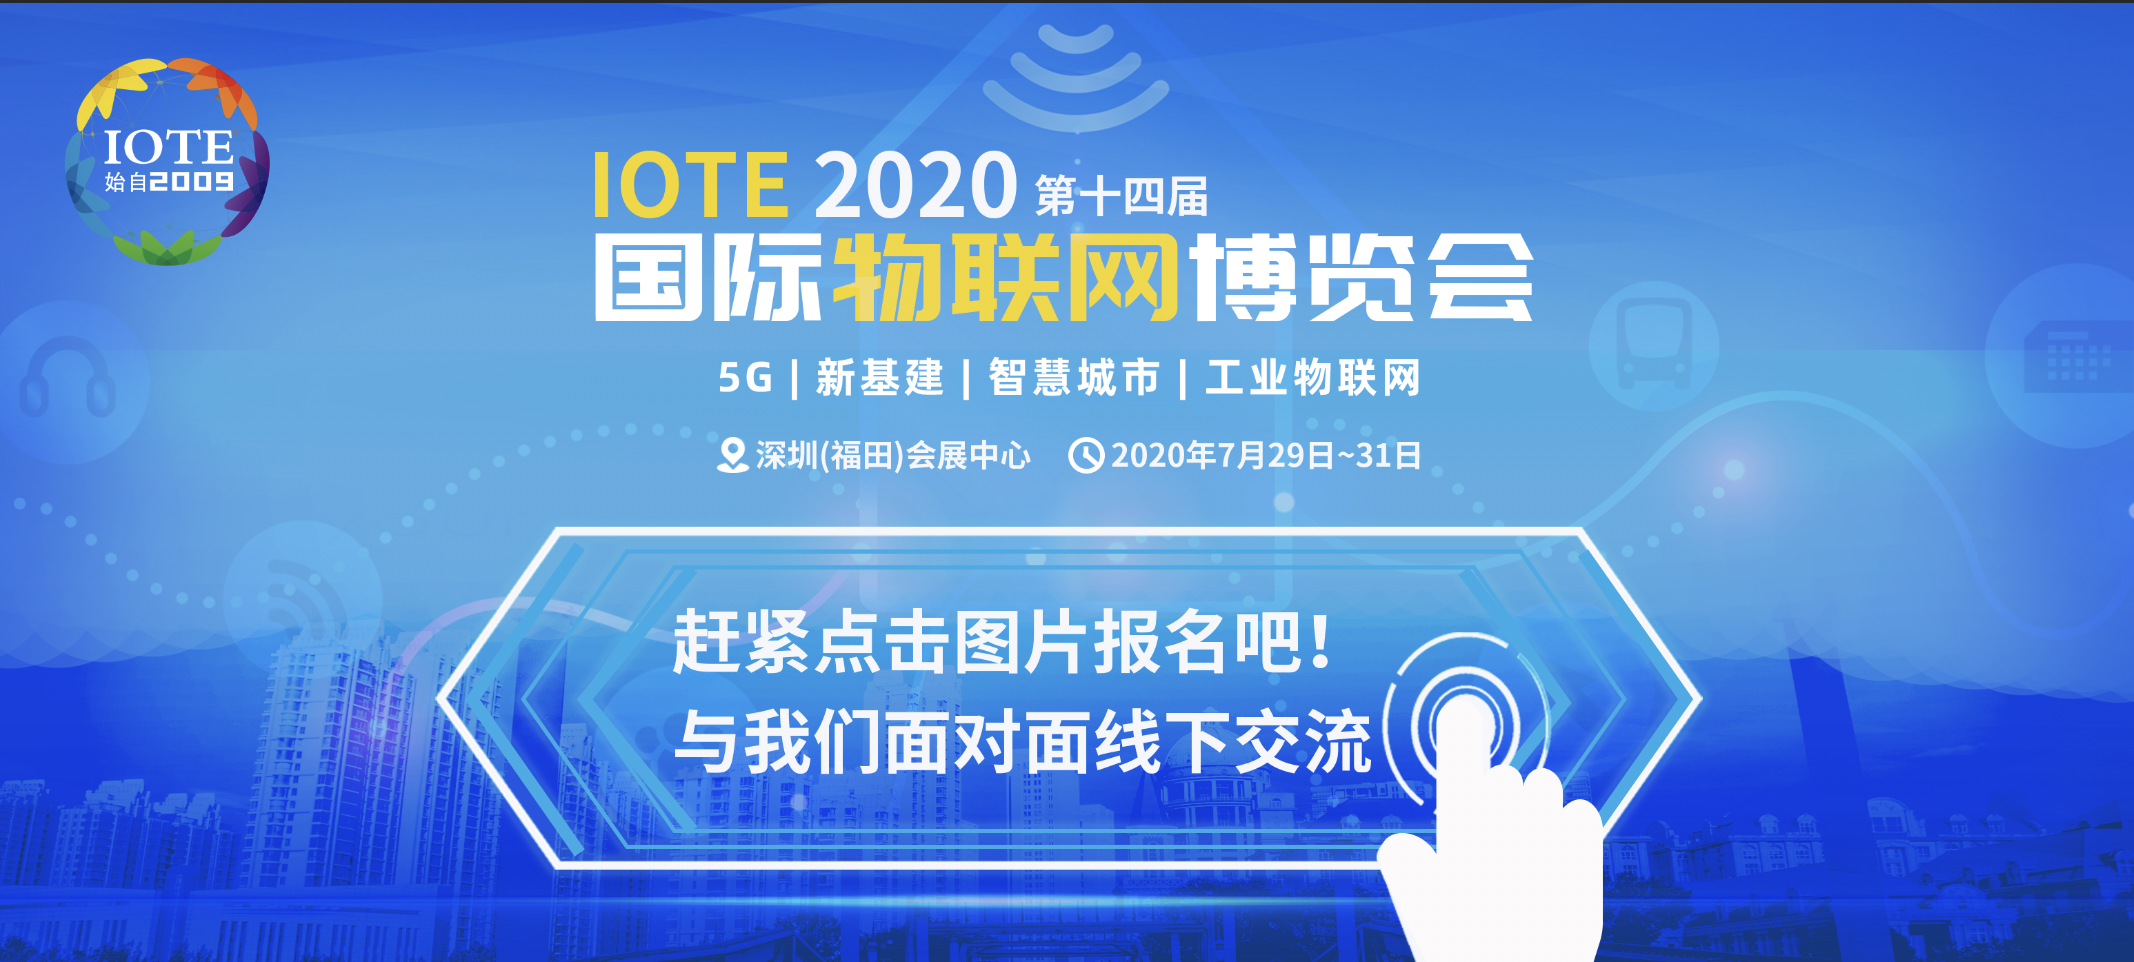 Arm即将重磅亮相IOTE 2020深圳国际物联网展